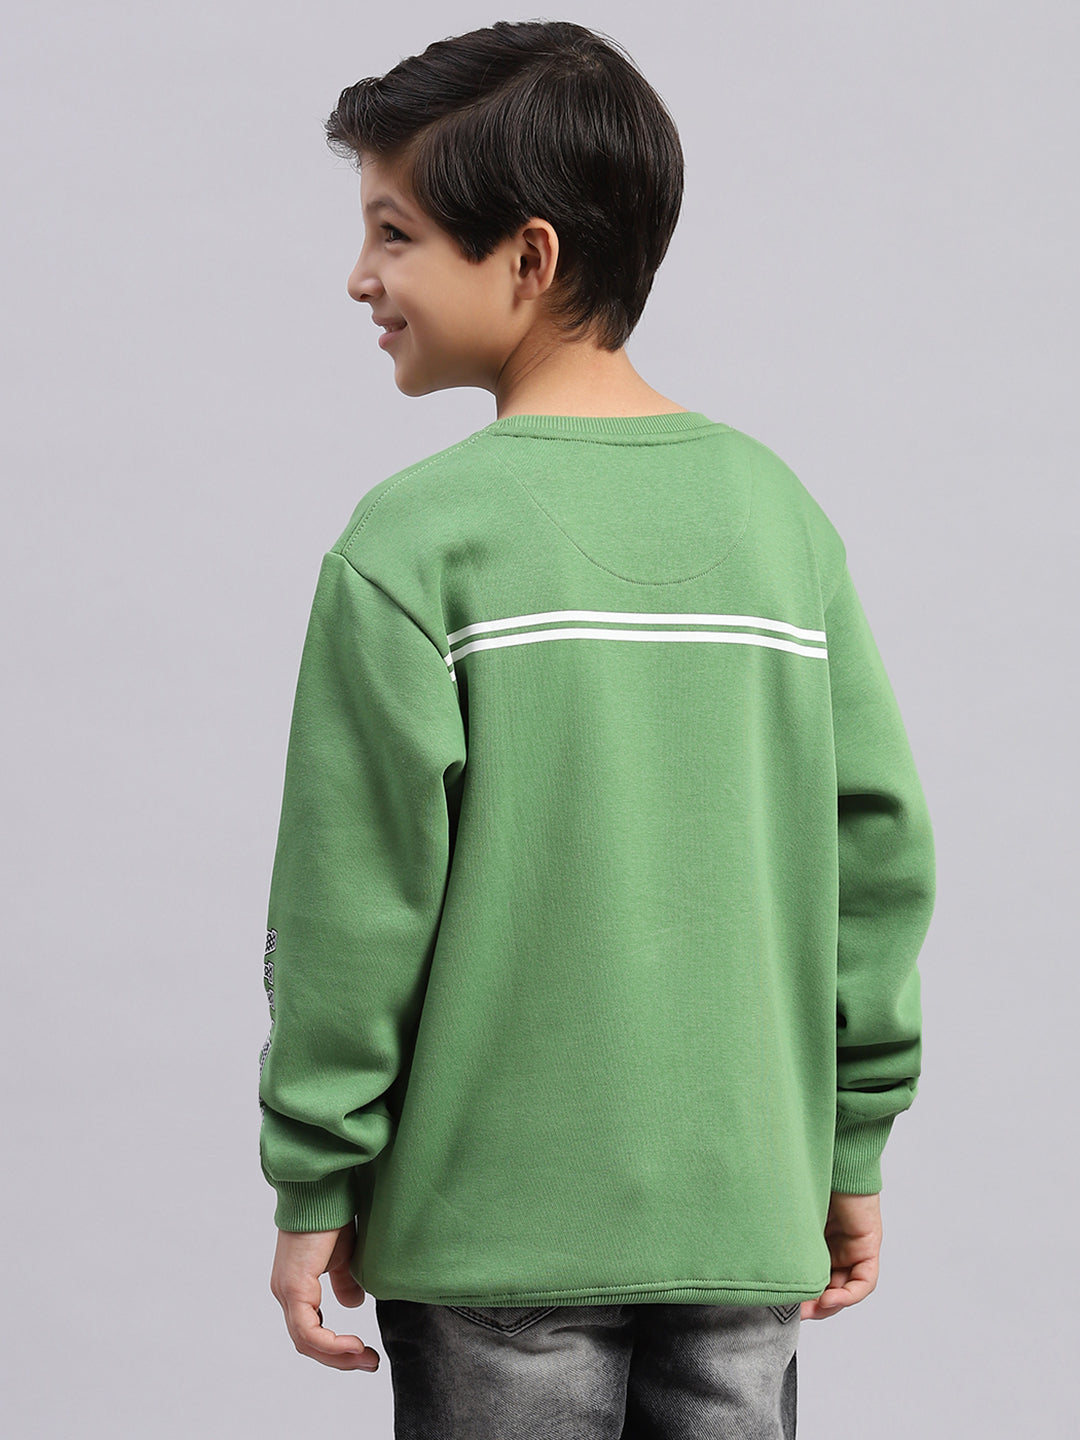 Boys Green Printed Round Neck Full Sleeve Sweatshirt